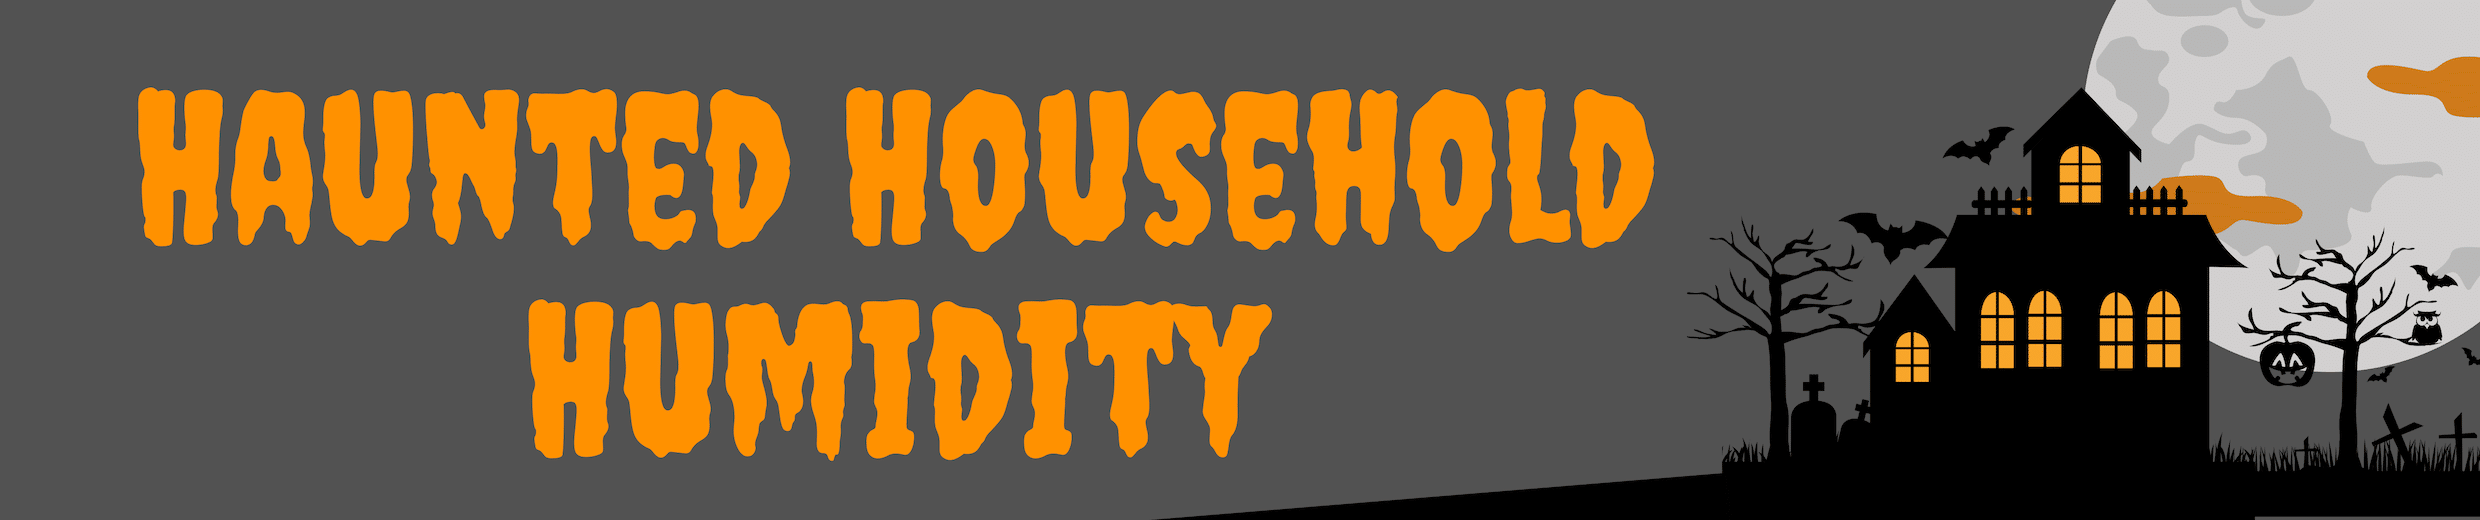 Haunted Household Humidity